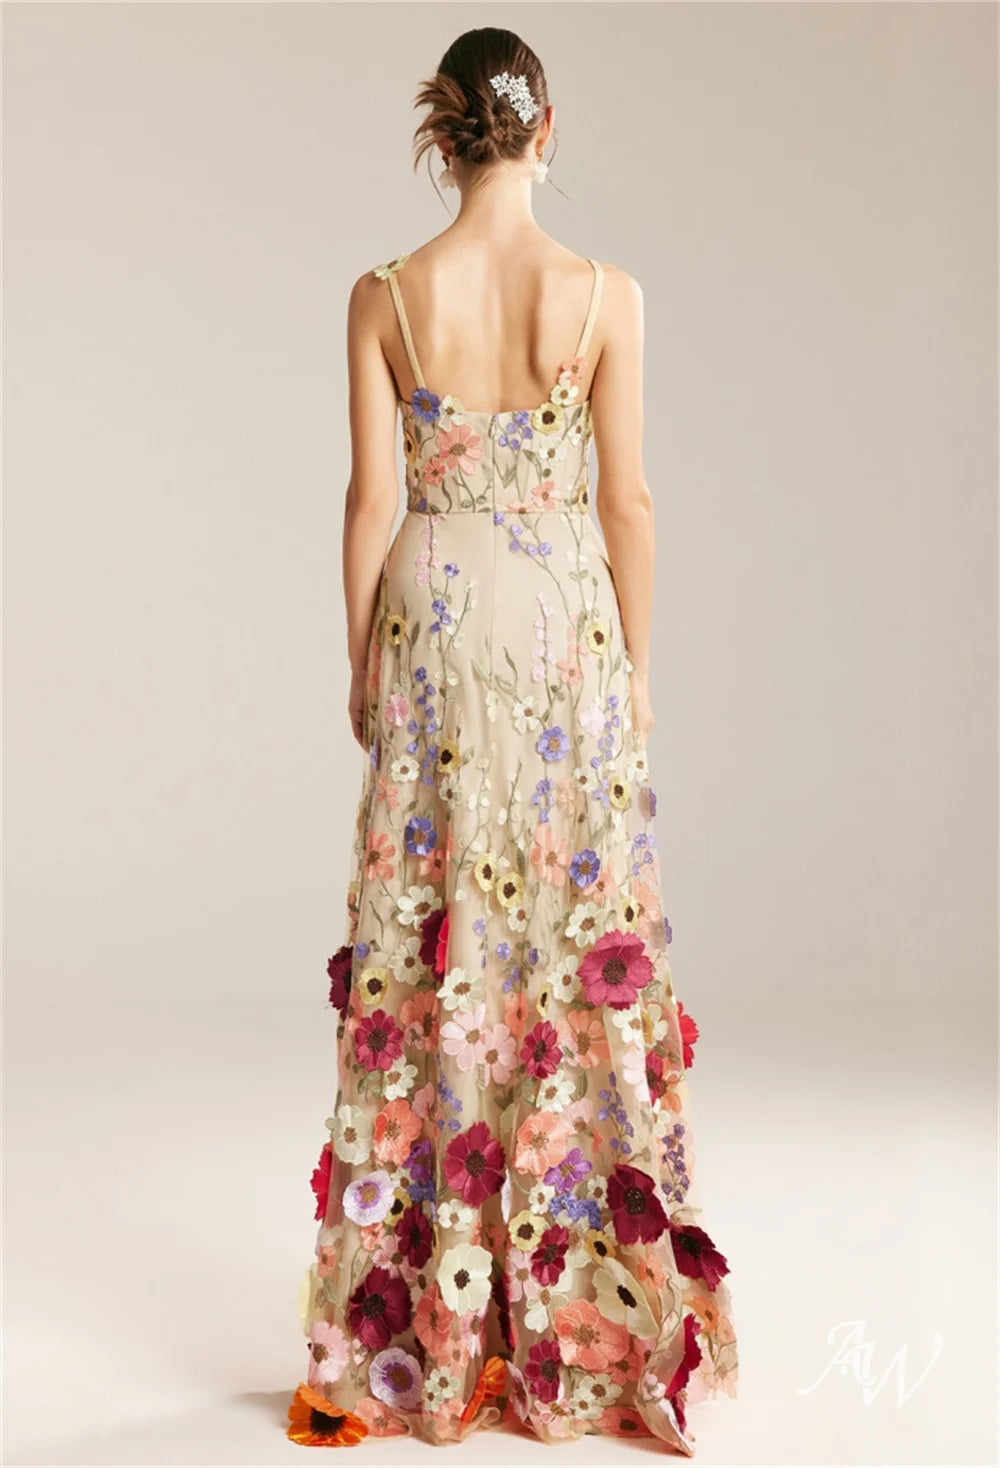 3D Lace Embroidery Prom Dress Sexy Spaghetti Strap Tulle A-line Vestidos De Fiesta Elegant Sleeveless Party Dress